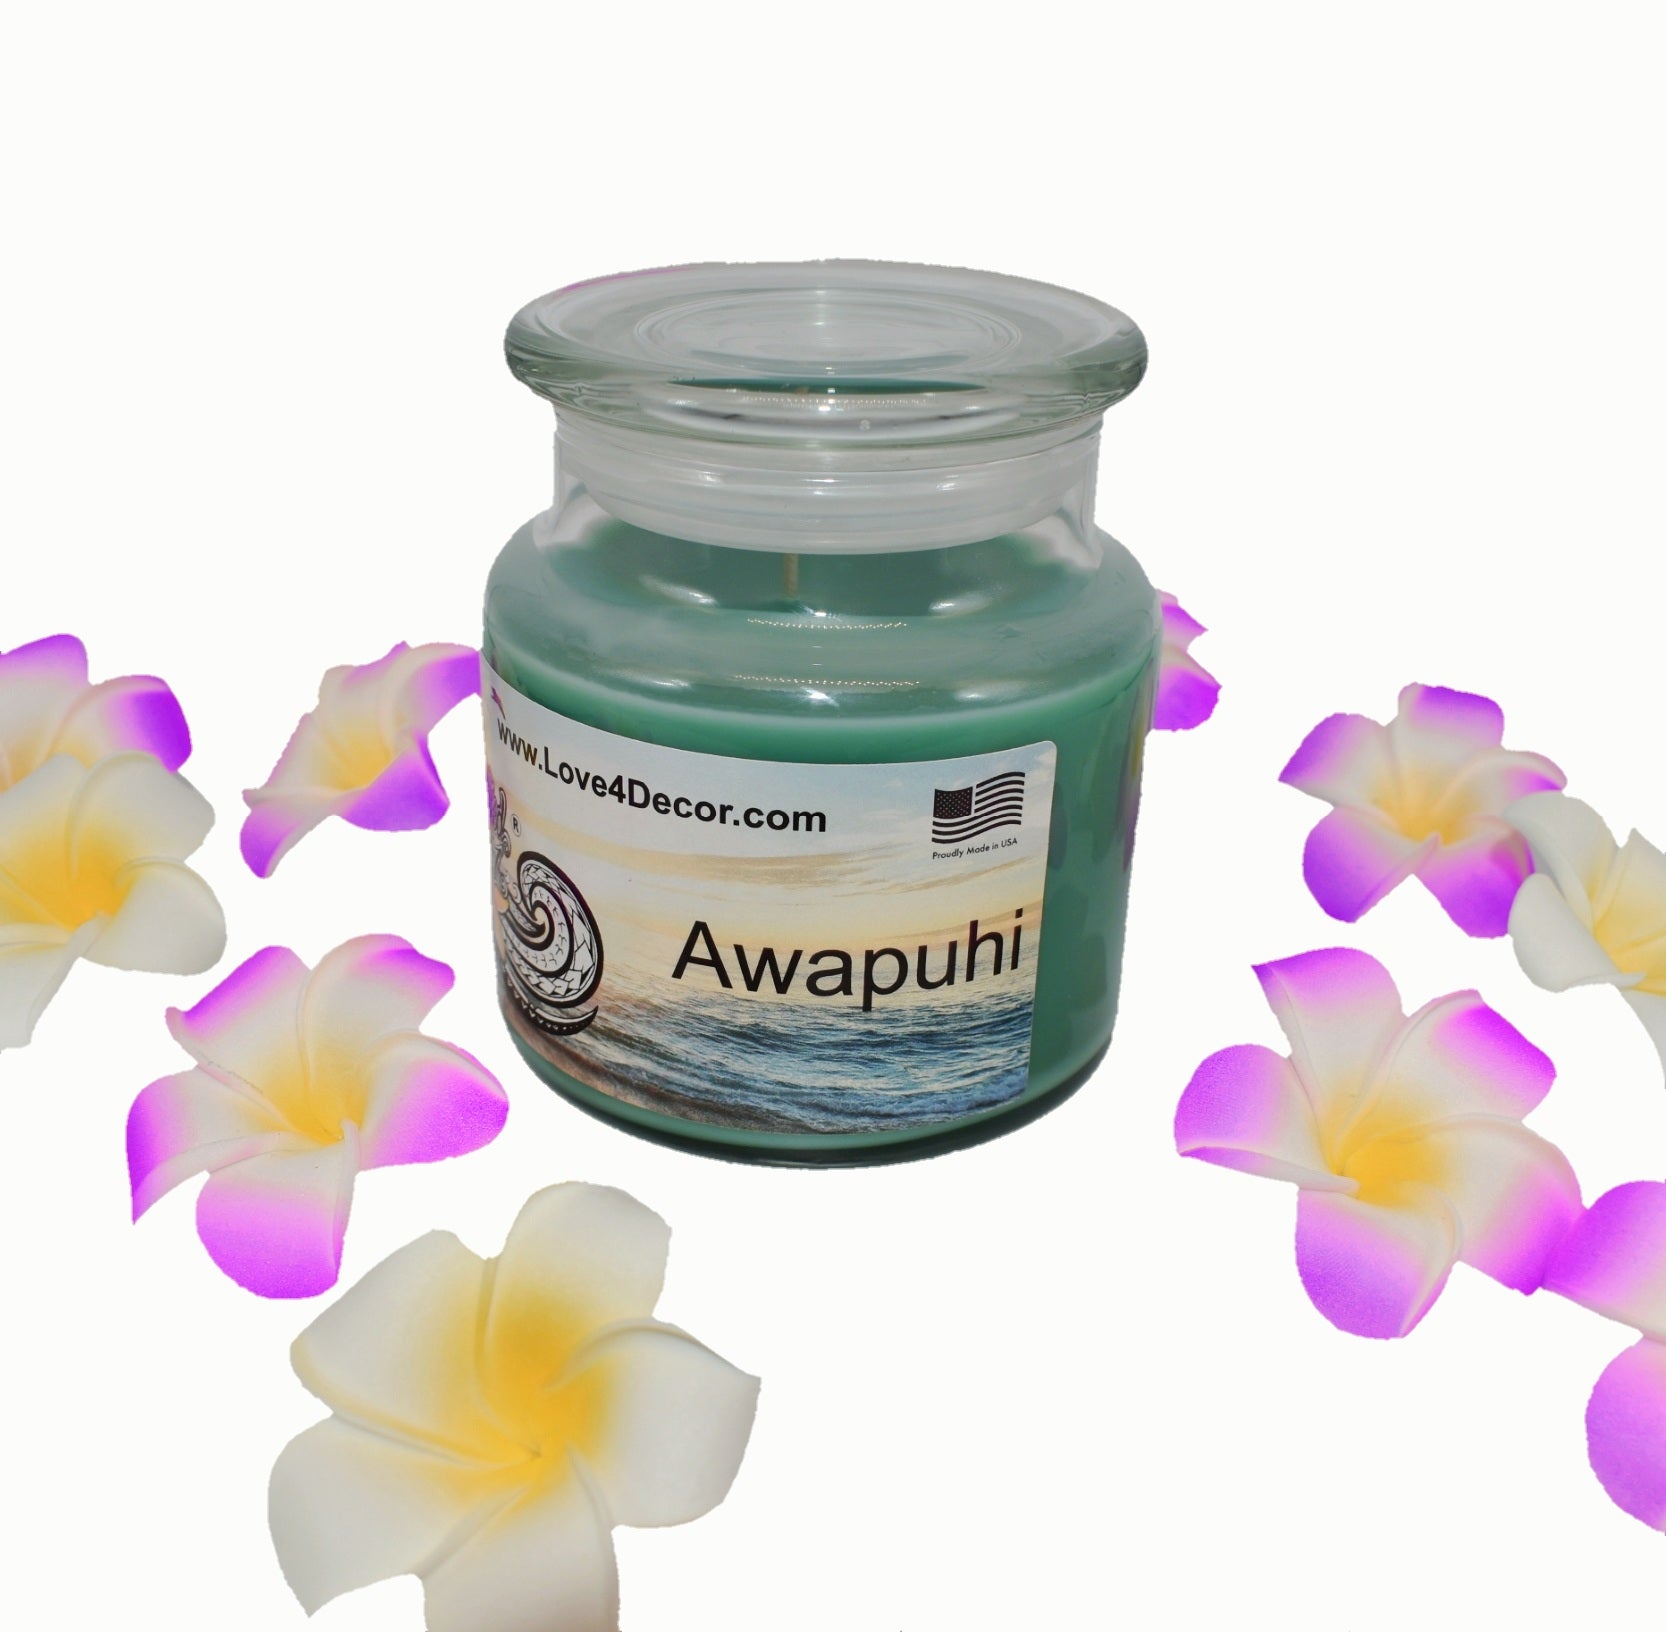 The Awapuhi Scent